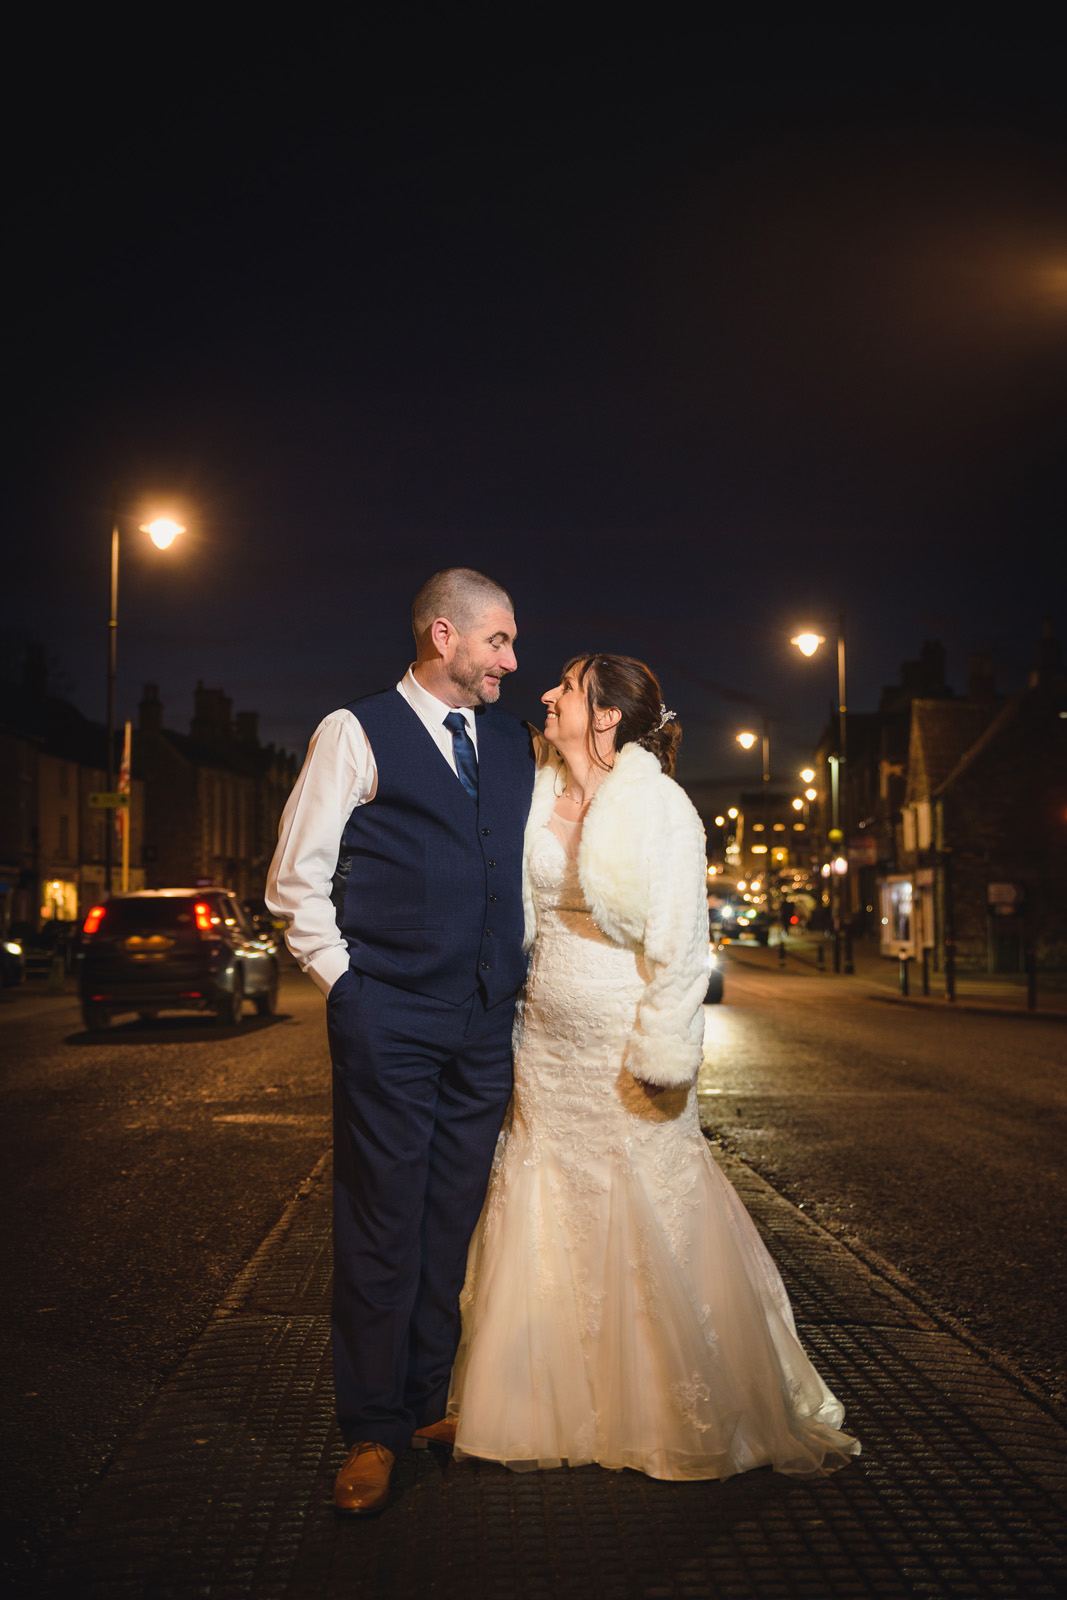 Wedding Photography at Chipping Sodbury Town Hall